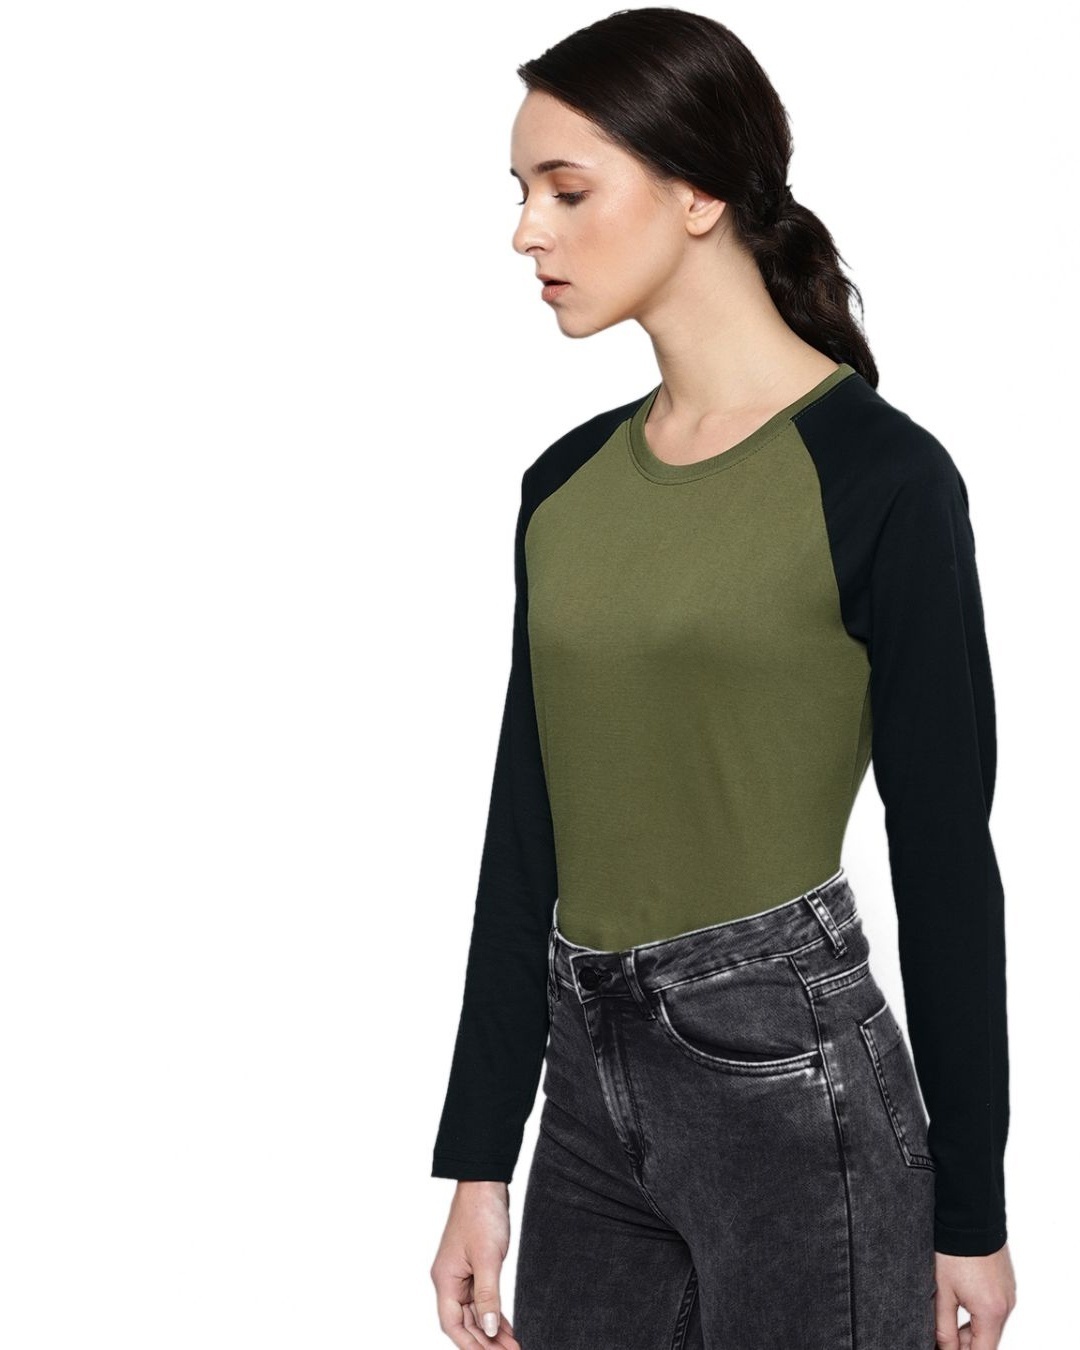 Shop Women's Green & Black Solid T-shirt-Design